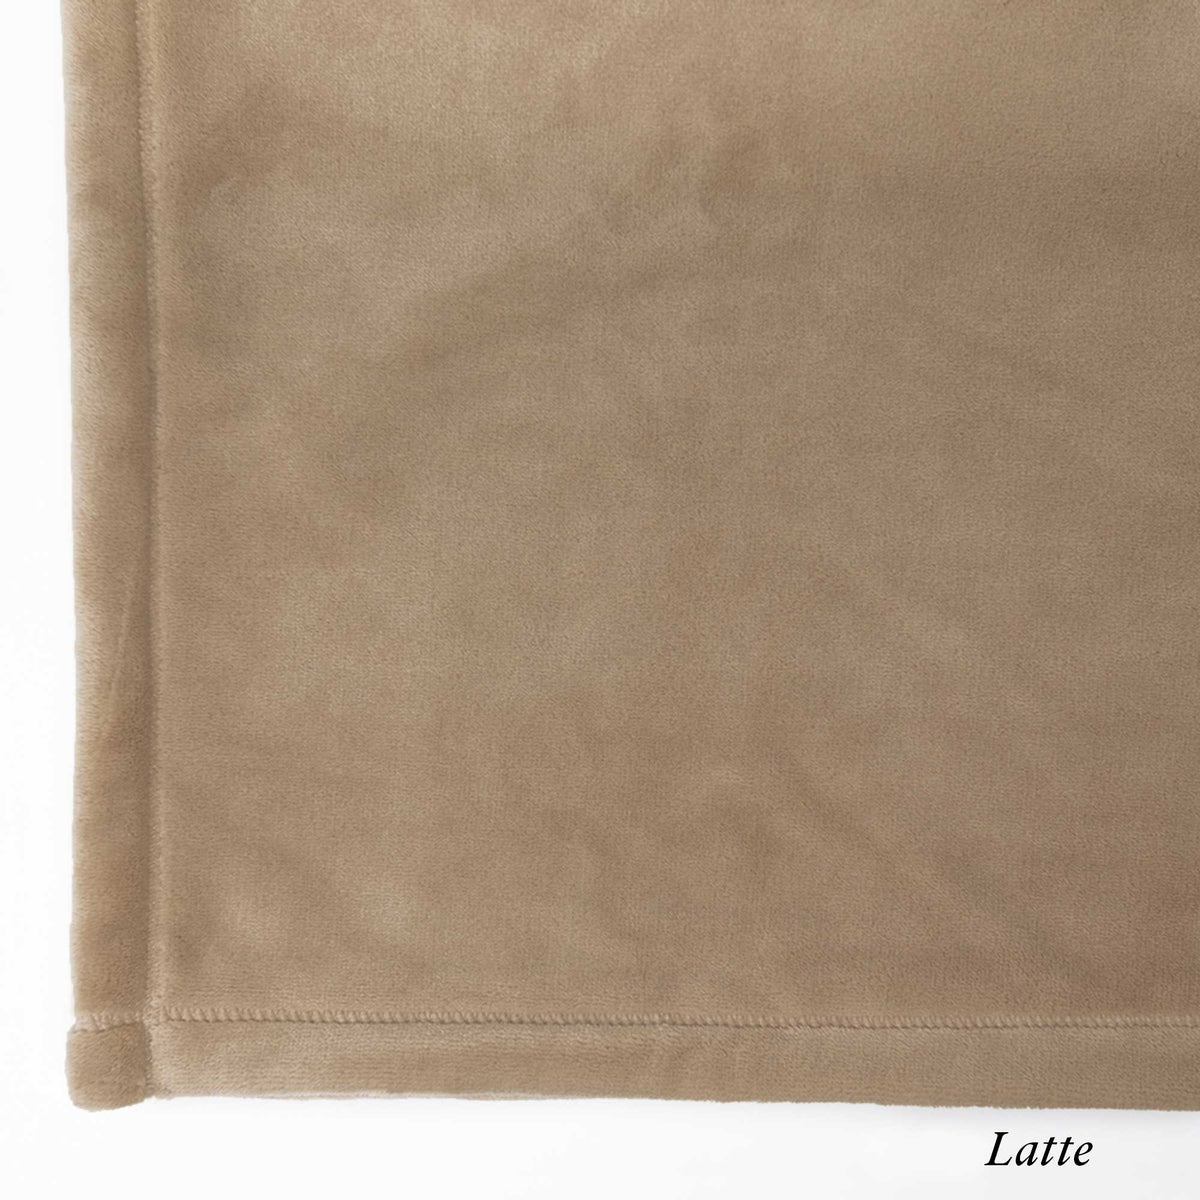 Latte Luster Loft Fleece Swatch - Luster Loft - luster loft fleece throw pillows - American Blanket Company